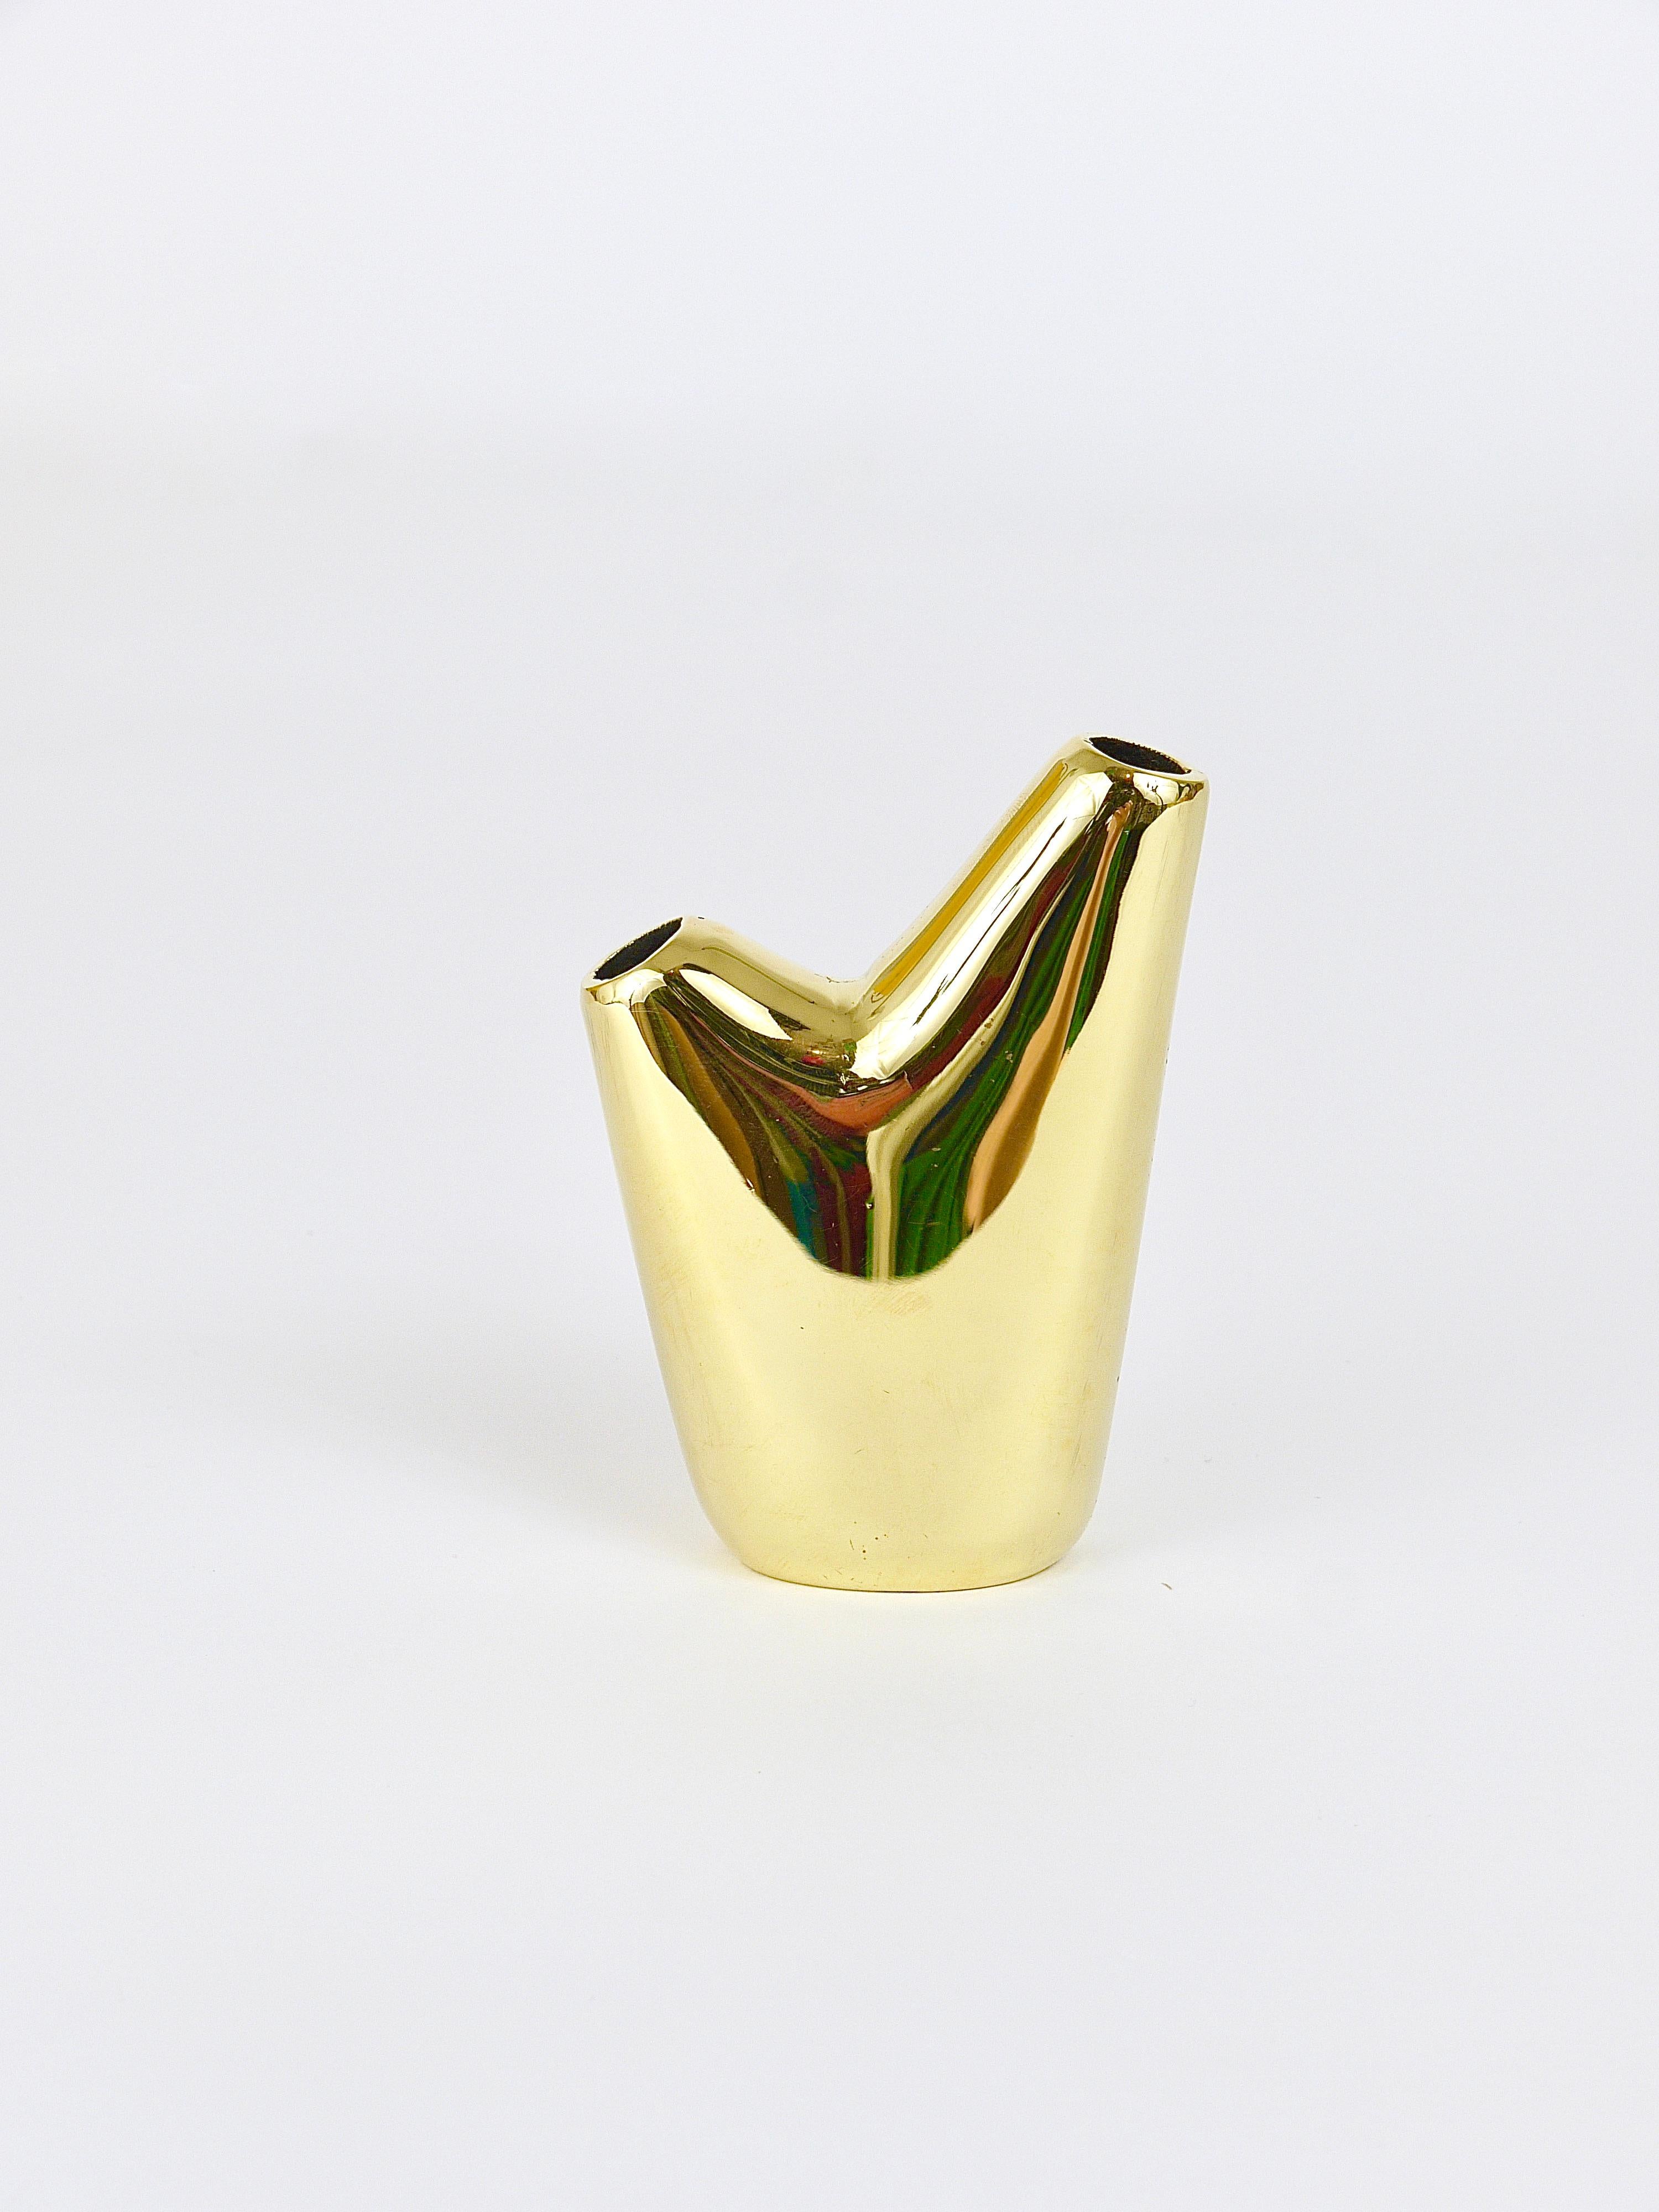 Carl Auböck Aorta Vase, Polished Brass, Austria For Sale 4